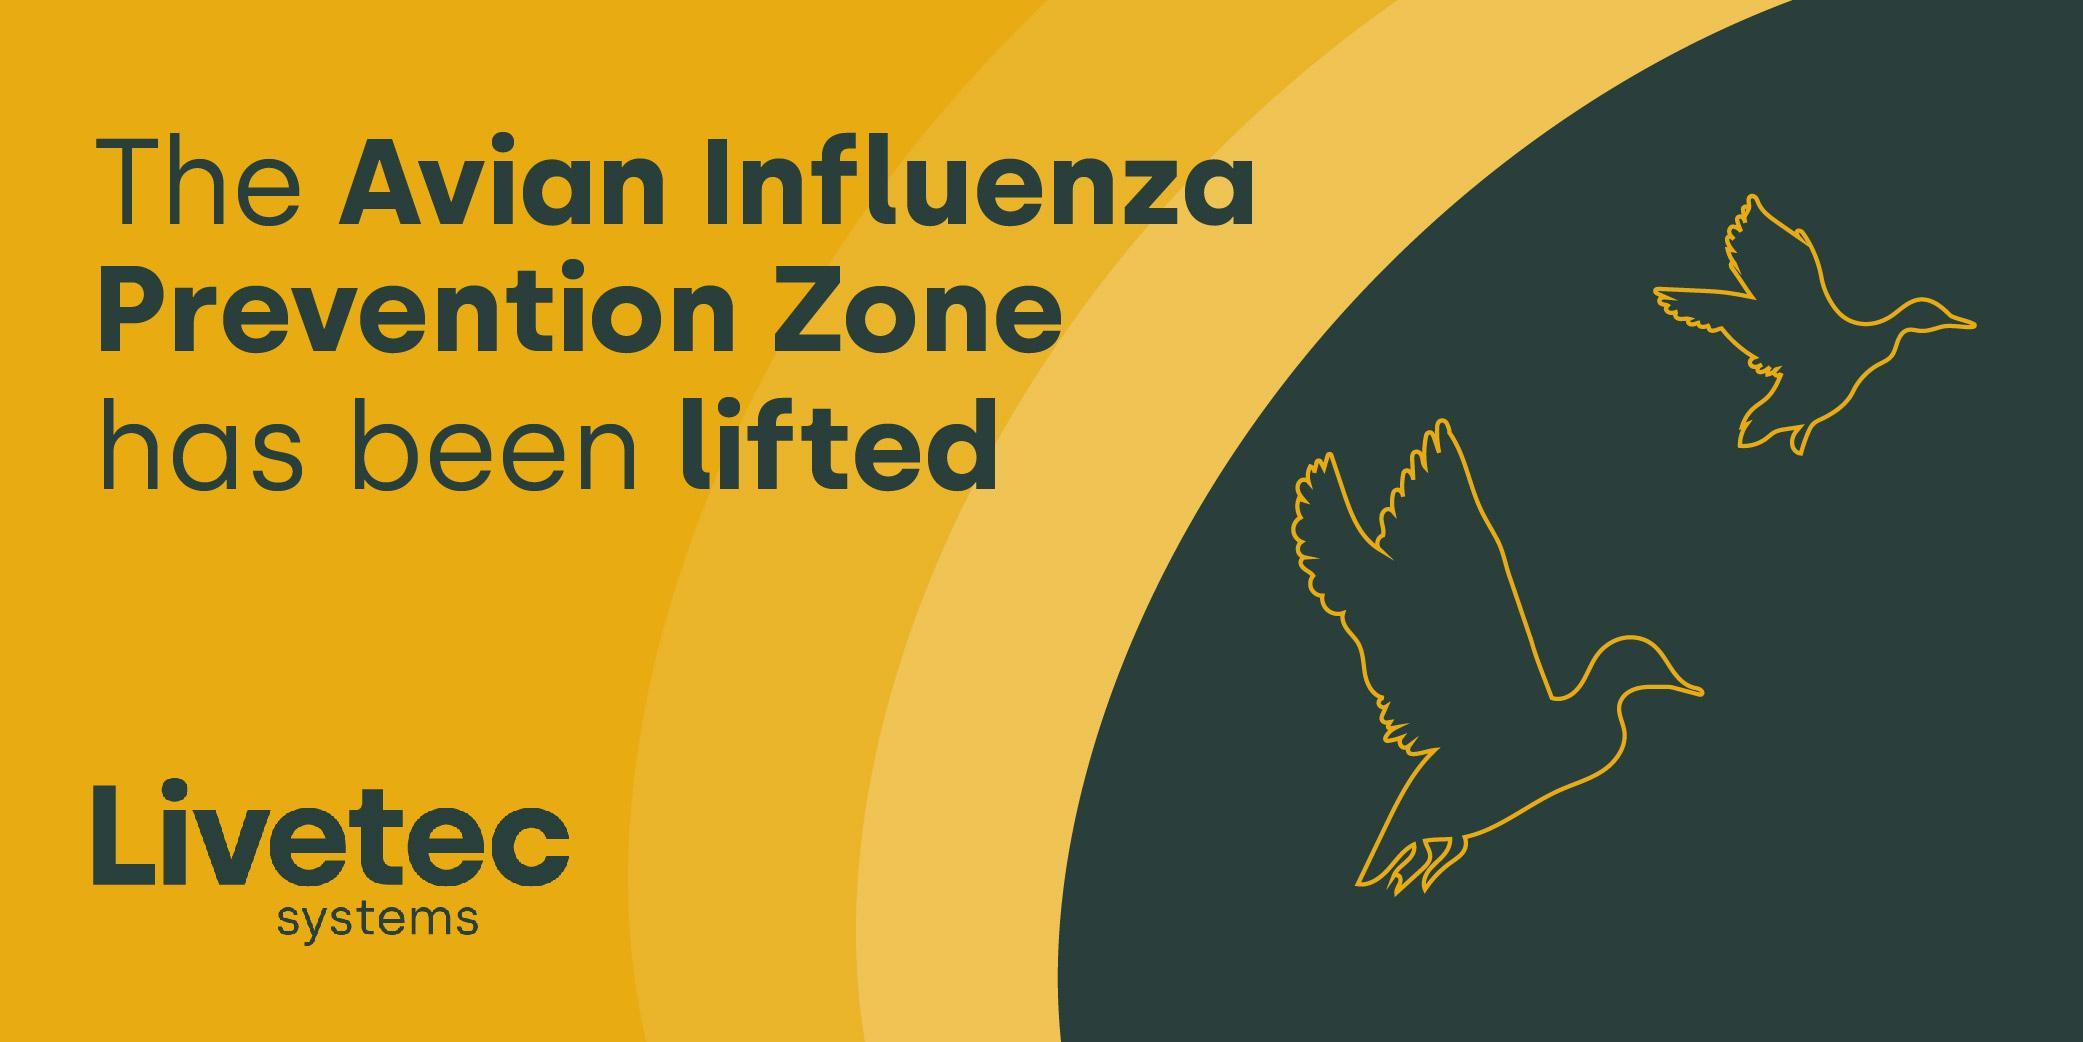 avian influenza prevention zone lifted | bird flu prevention zone UK